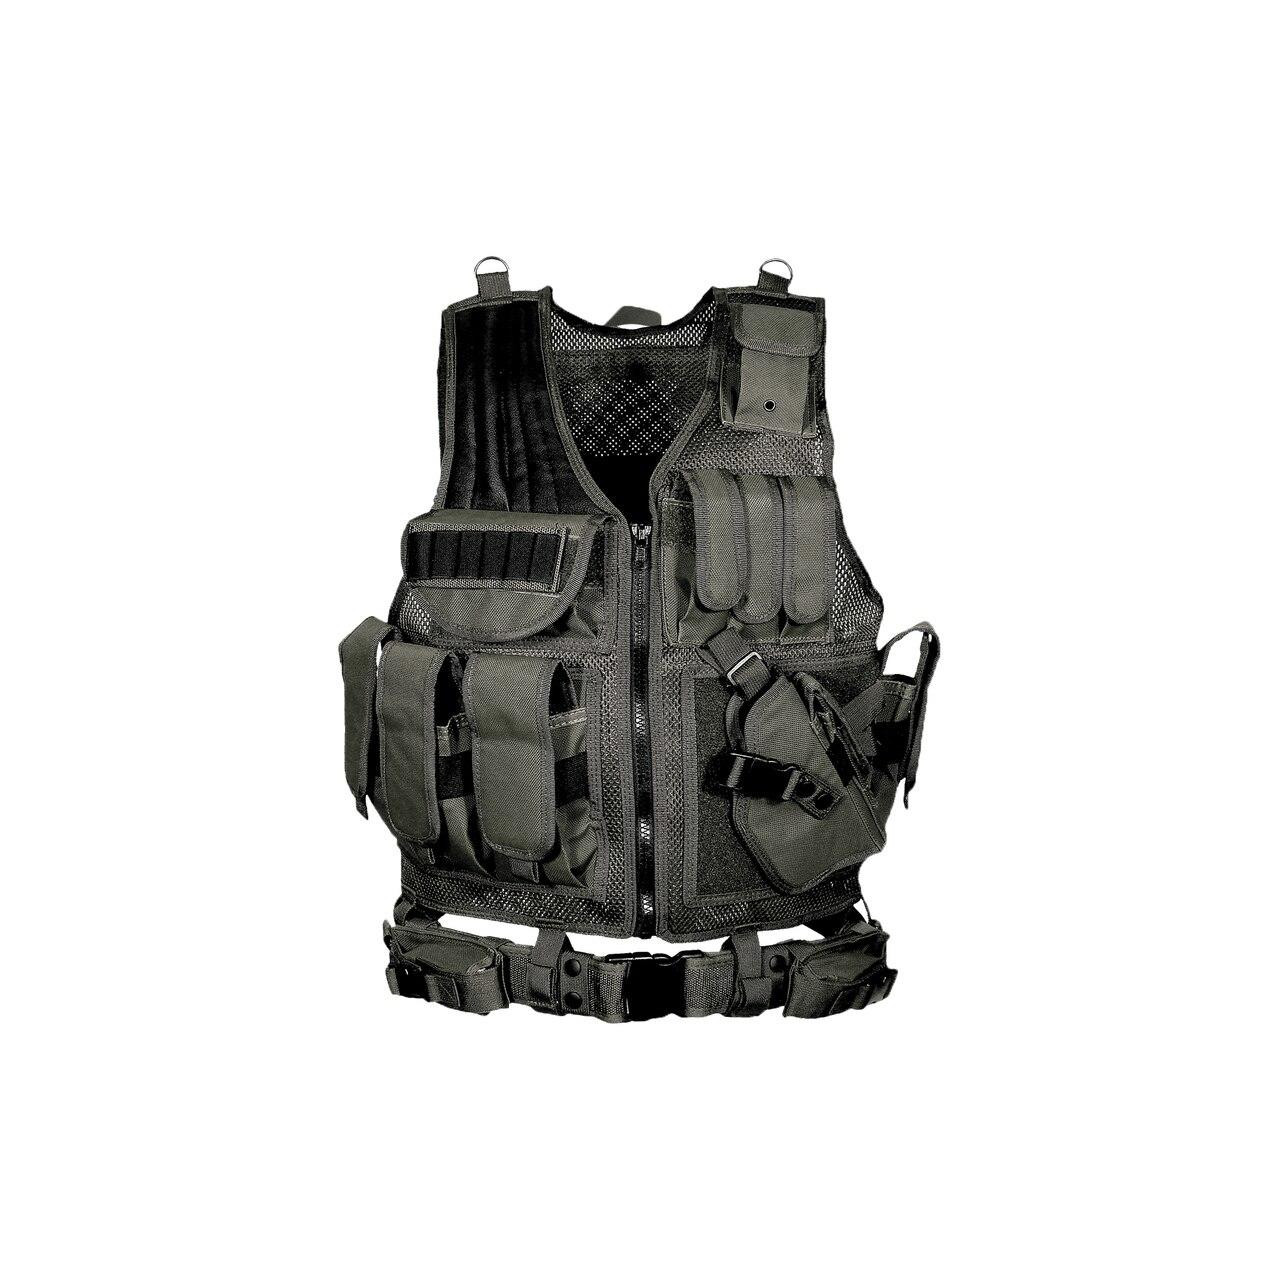 Leapers, Inc - UTG Utg Le Tactical Vest Black 4712274520547